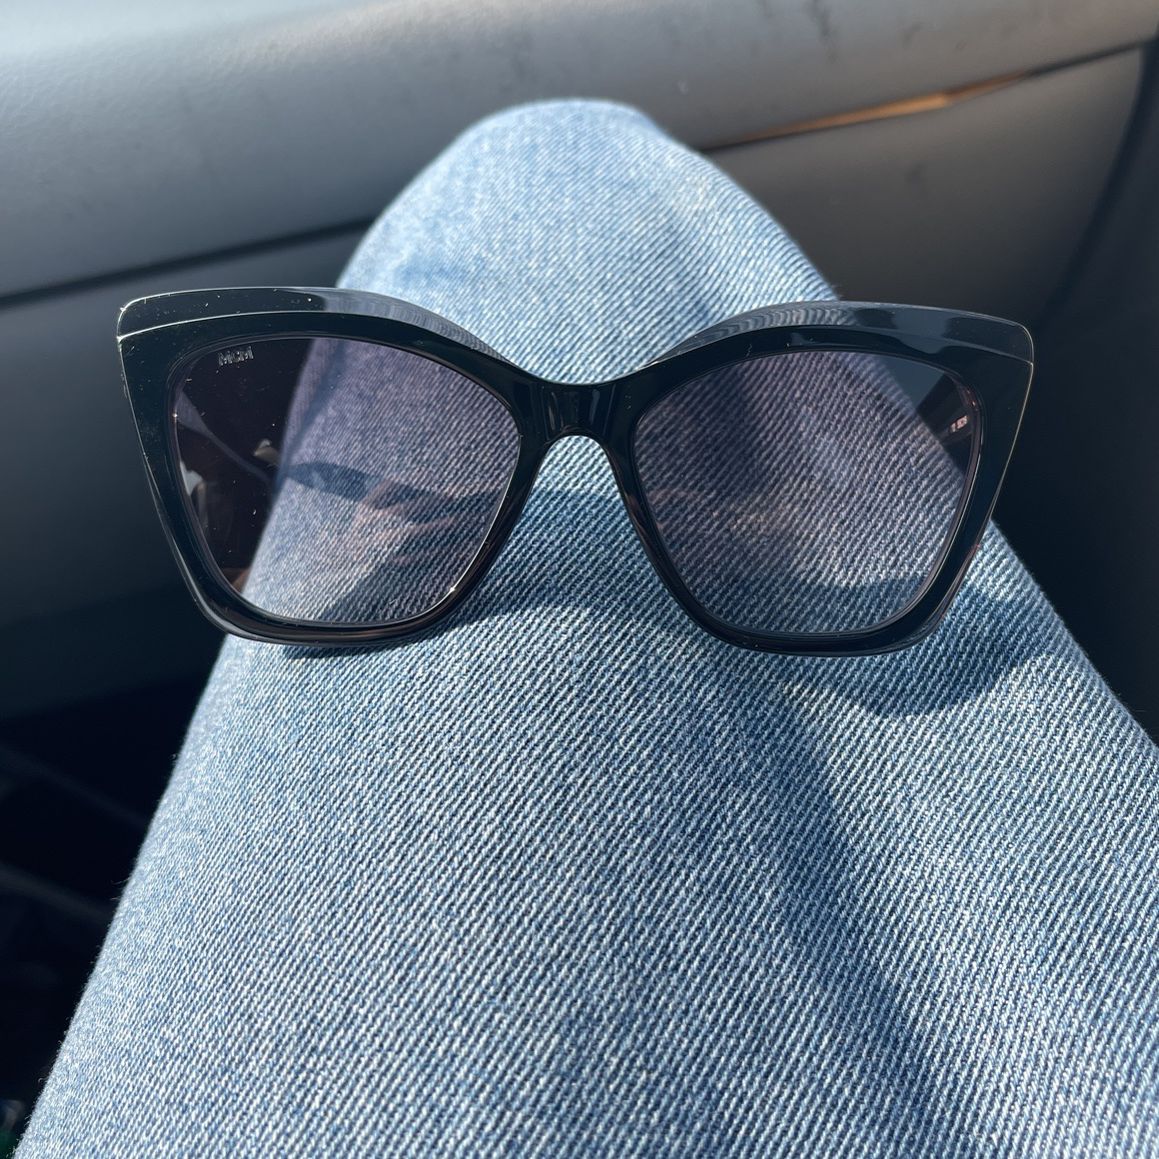 Cat-Eye Type Lens Black Framed MCM Sunglasses for Sale in Frisco, TX -  OfferUp